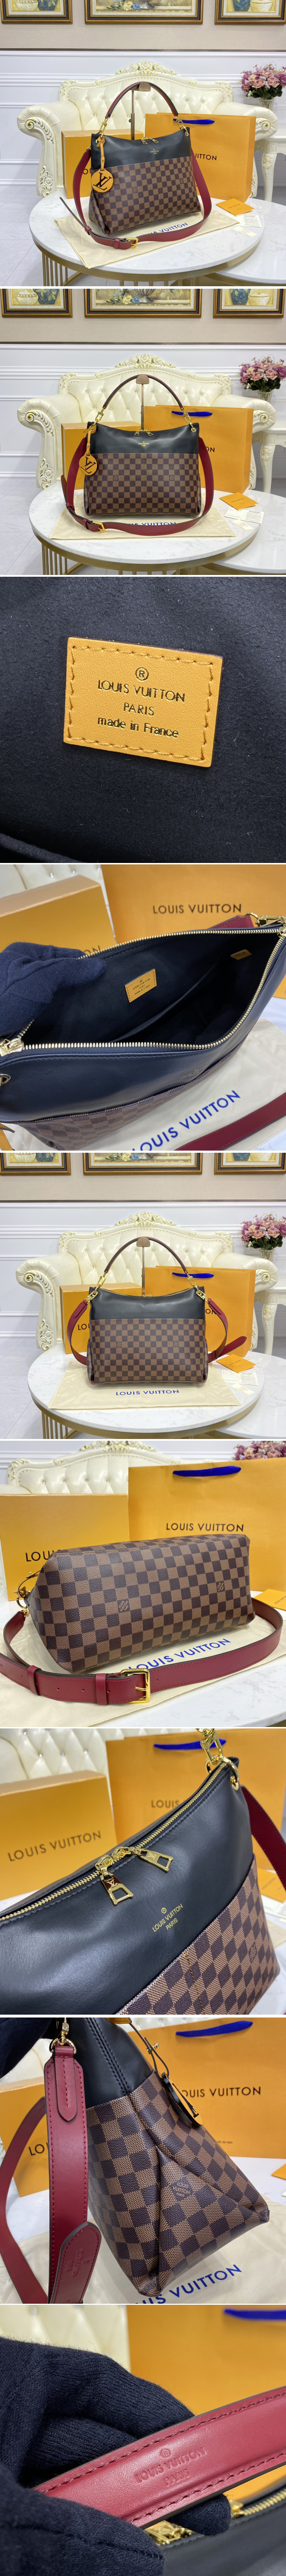 Louis Vuitton N40369 LV Maida Hobo handbag in Damier Ebene coated canvas  and smooth calfskin leather Replica sale online ,buy fake bag